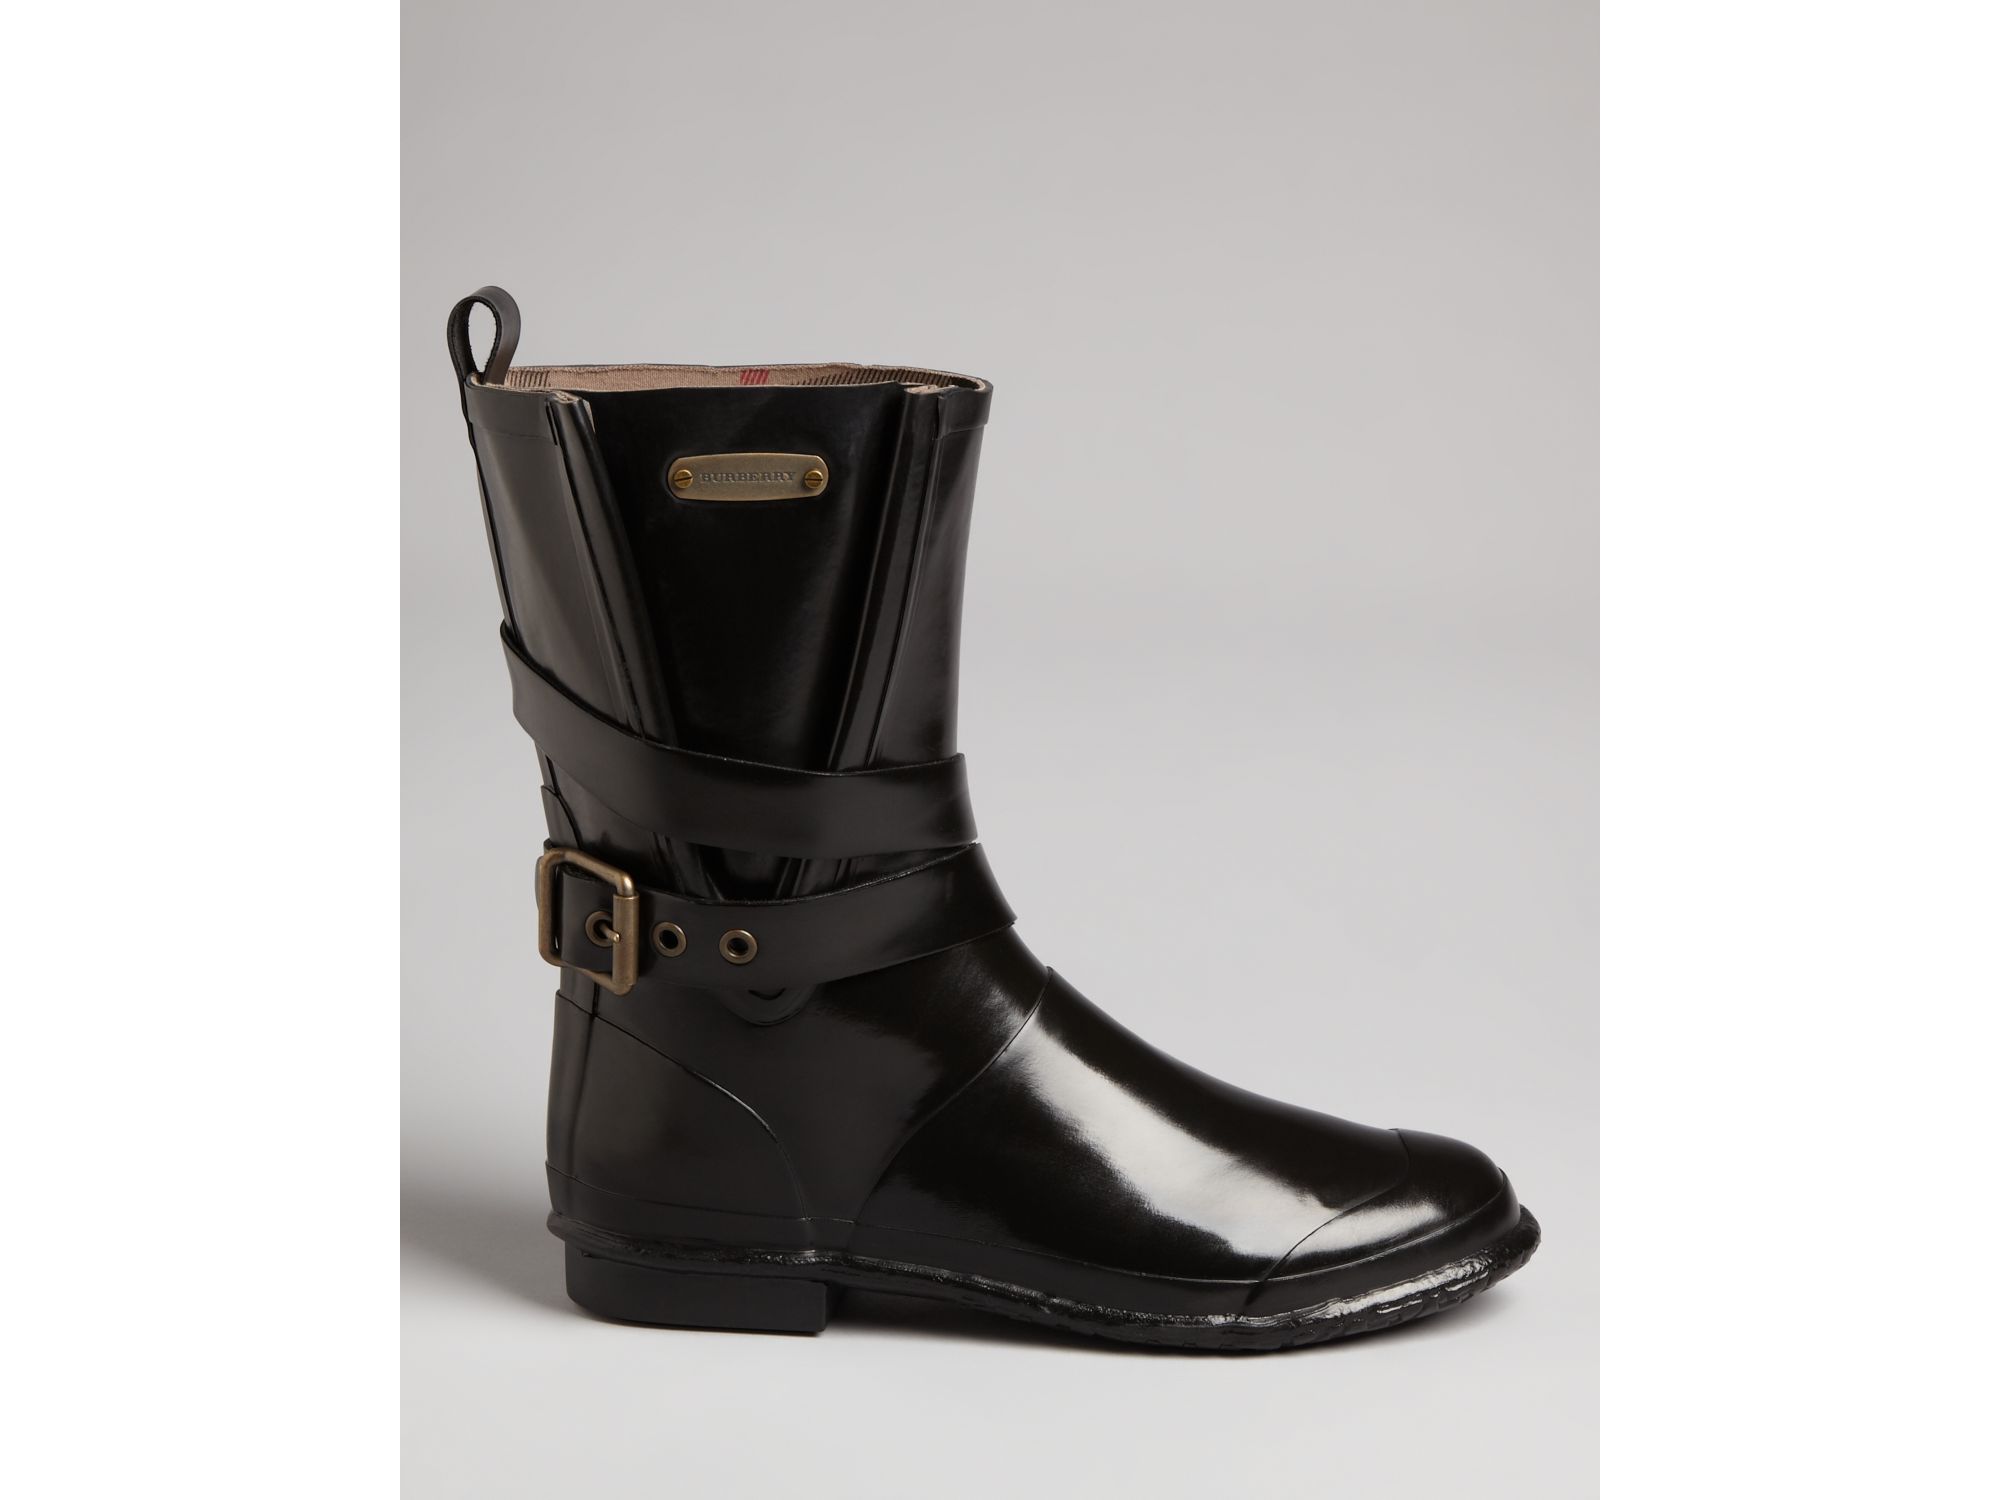 burberry rain boots nordstrom rack